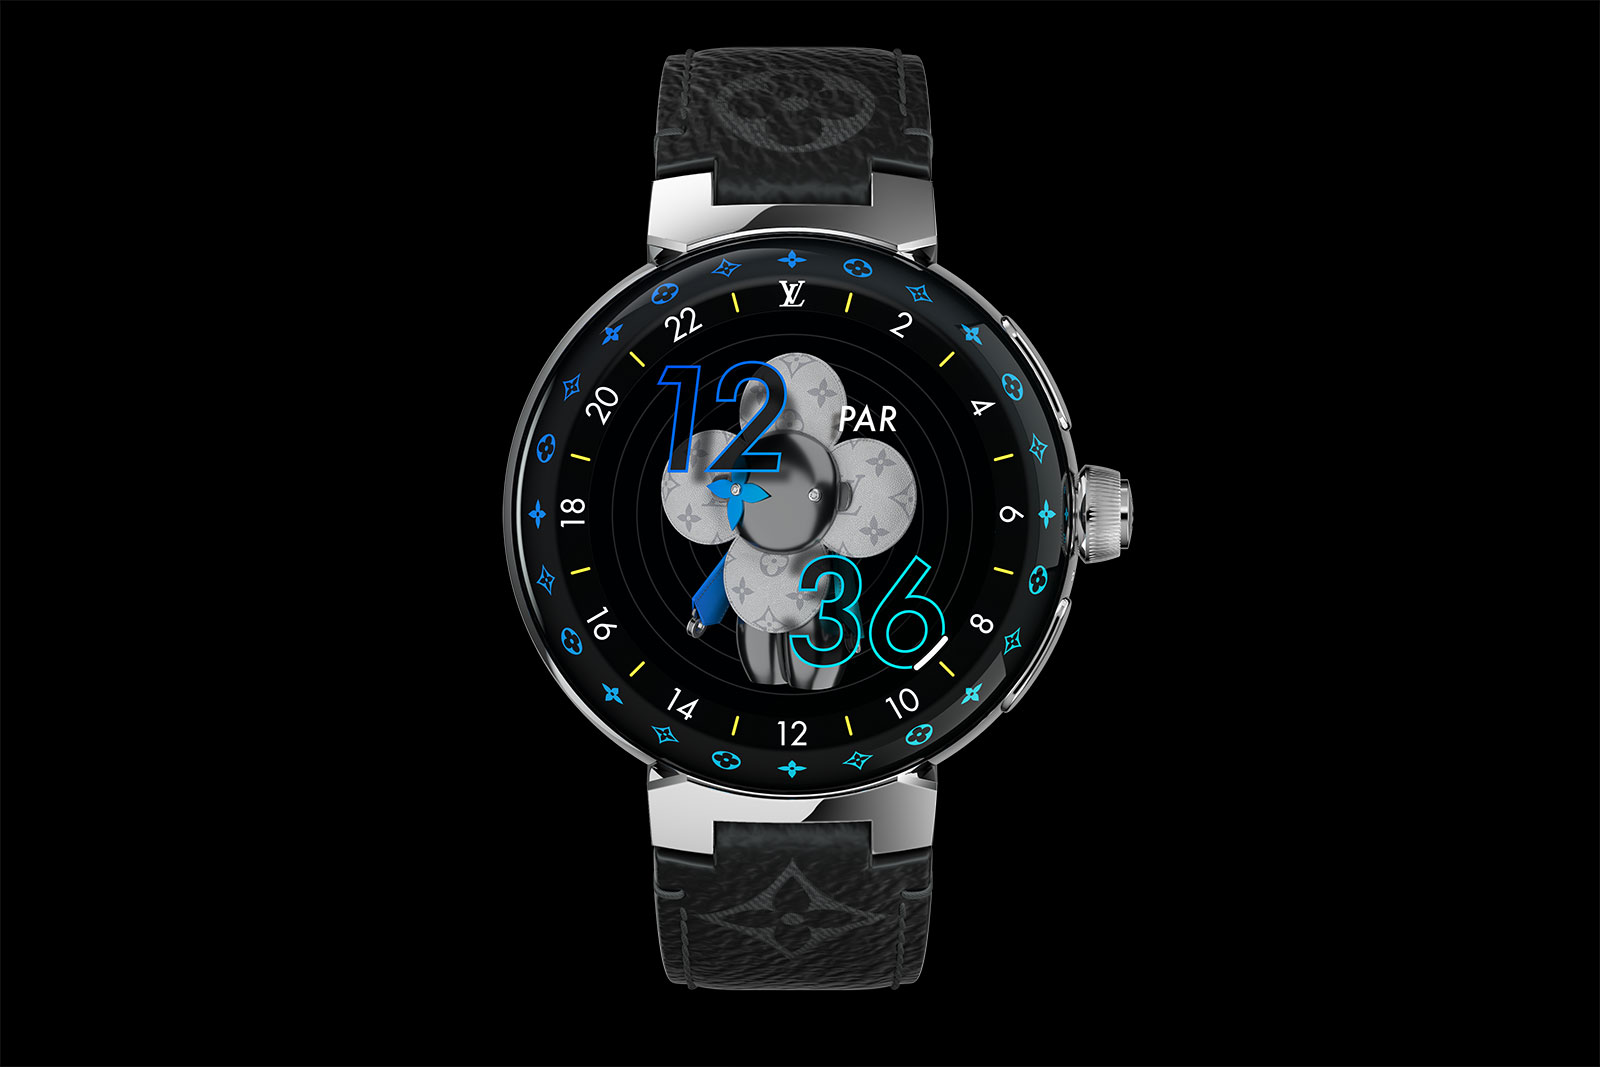 Louis Vuitton Introduces the Tambour Horizon Light Up Smartwatch